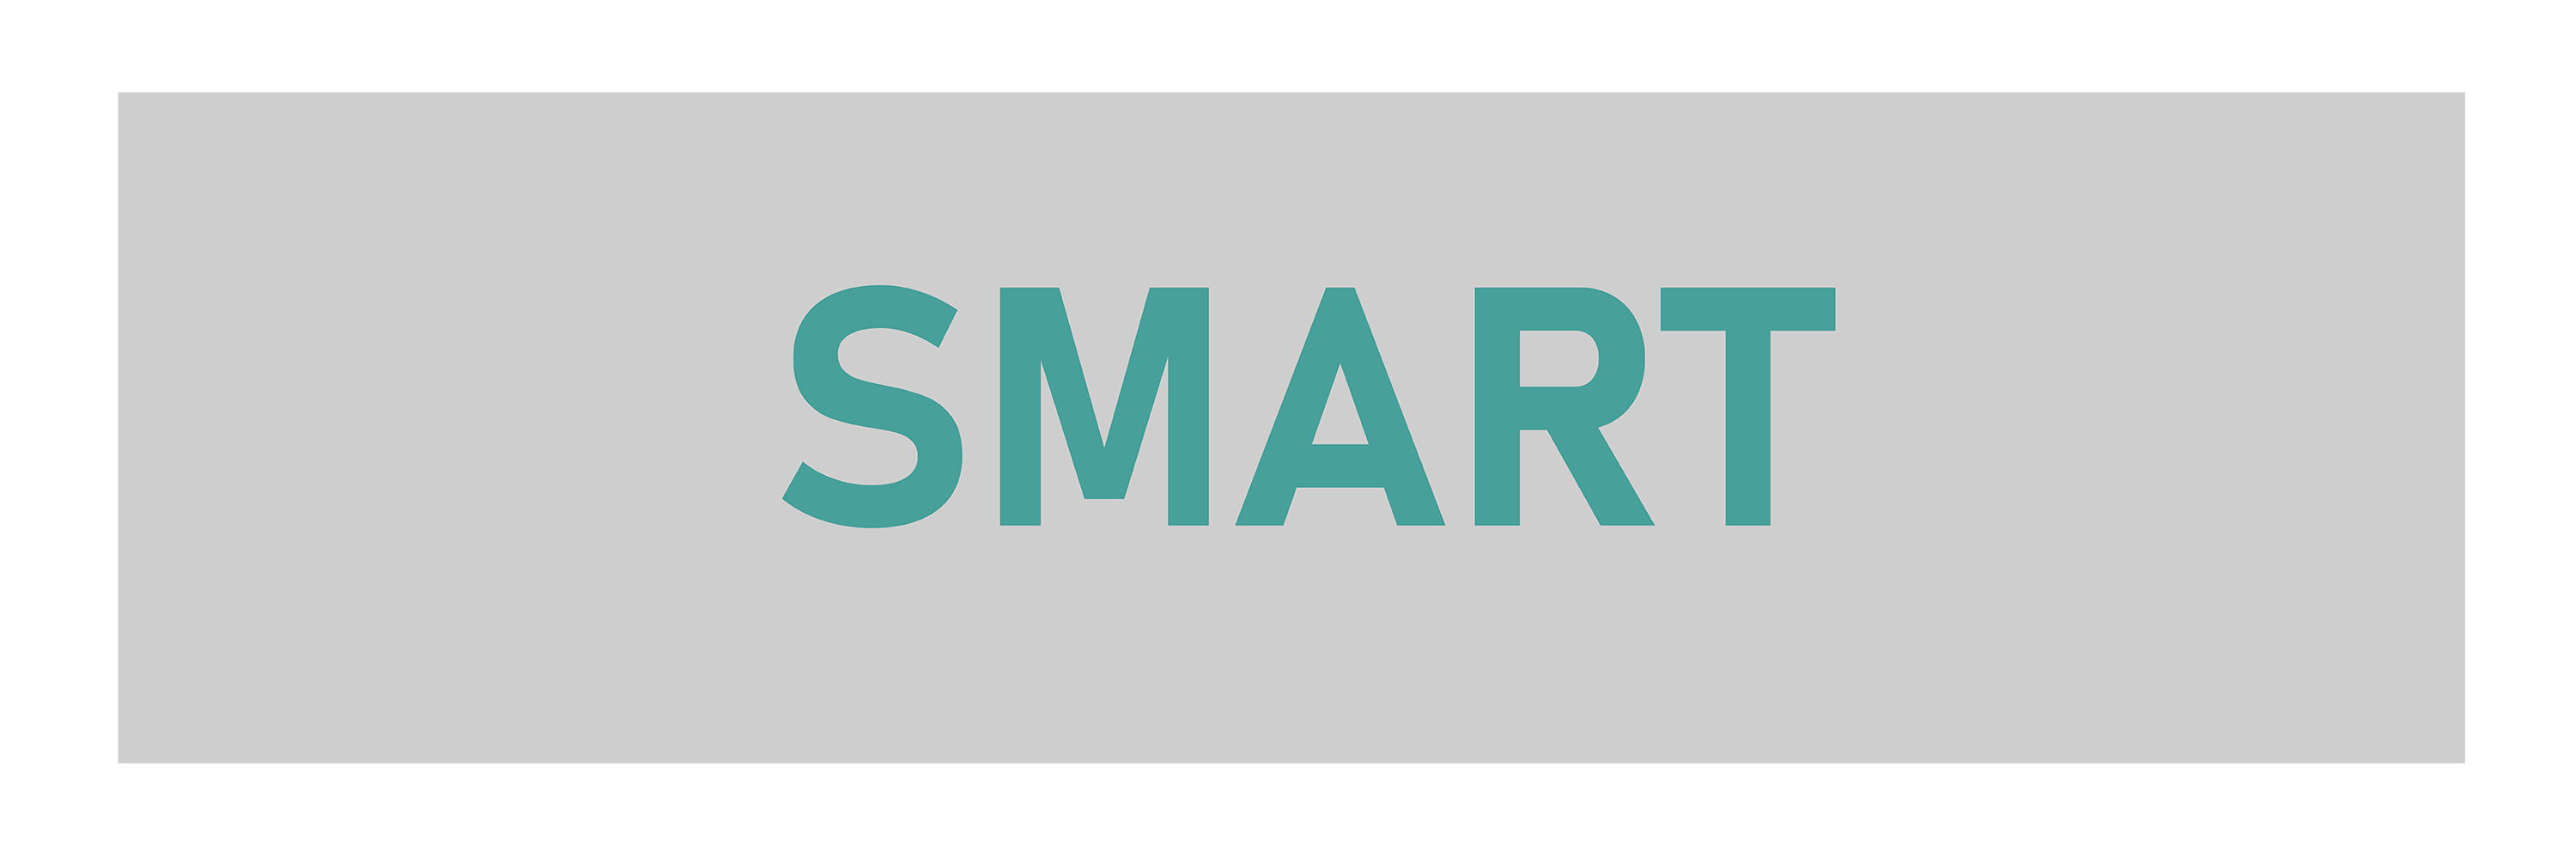 smart-logo-alt